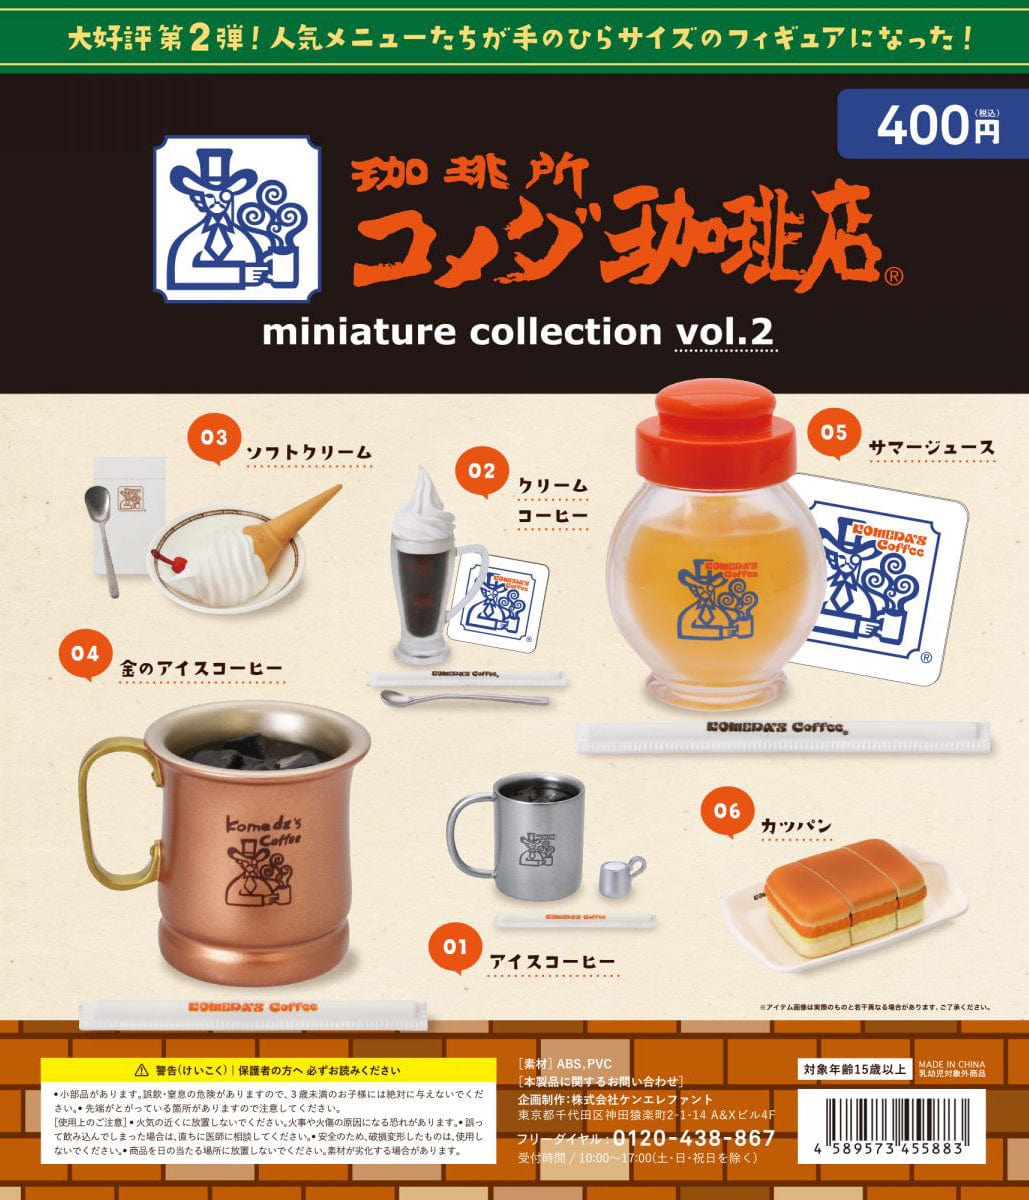 Kenelephant CP0481 Komeda Coffee Miniature Collection vol 2